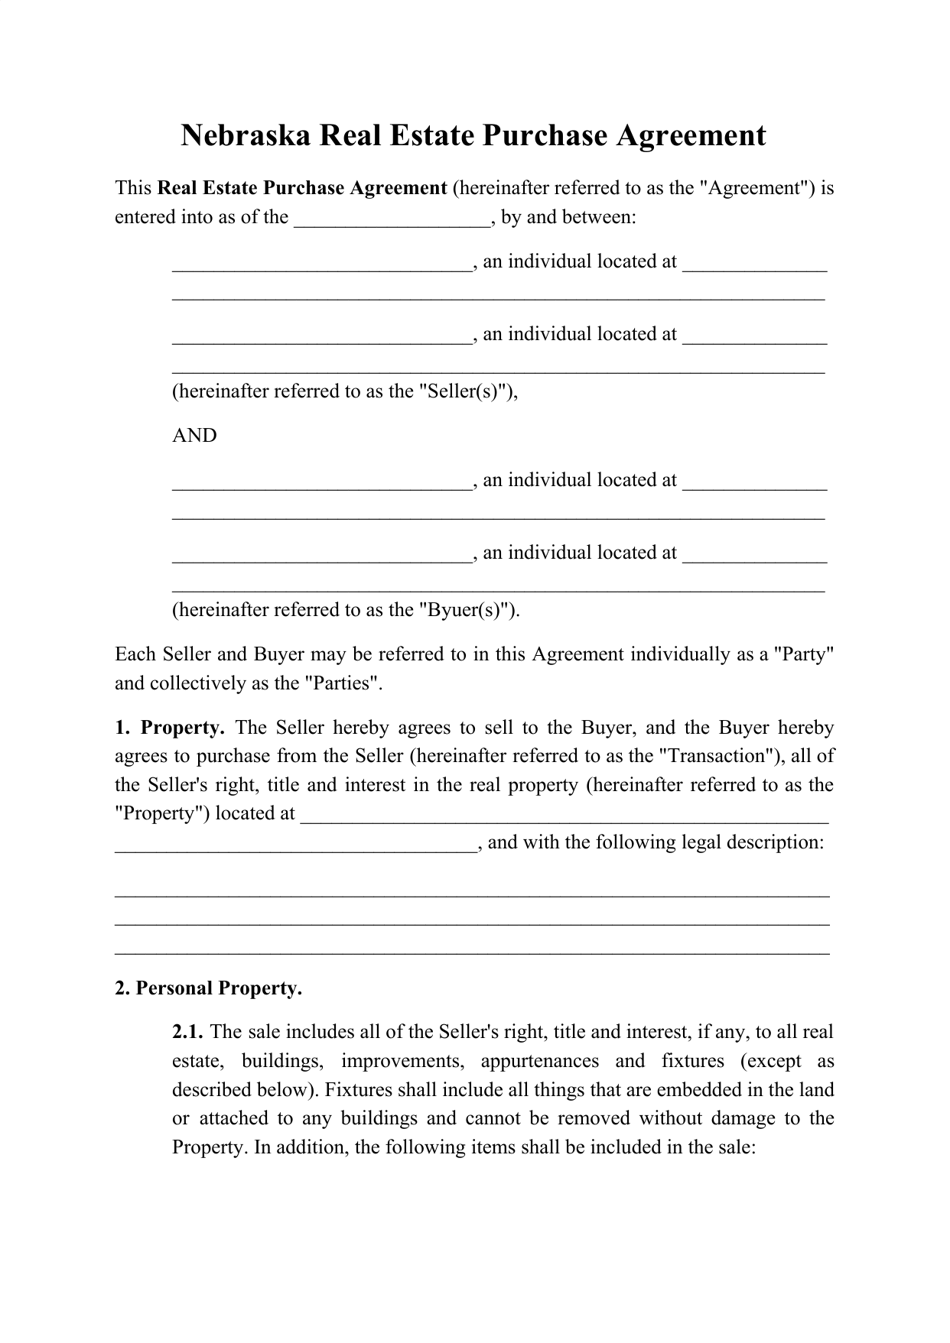 nebraska-real-estate-purchase-agreement-template-download-printable-pdf-templateroller